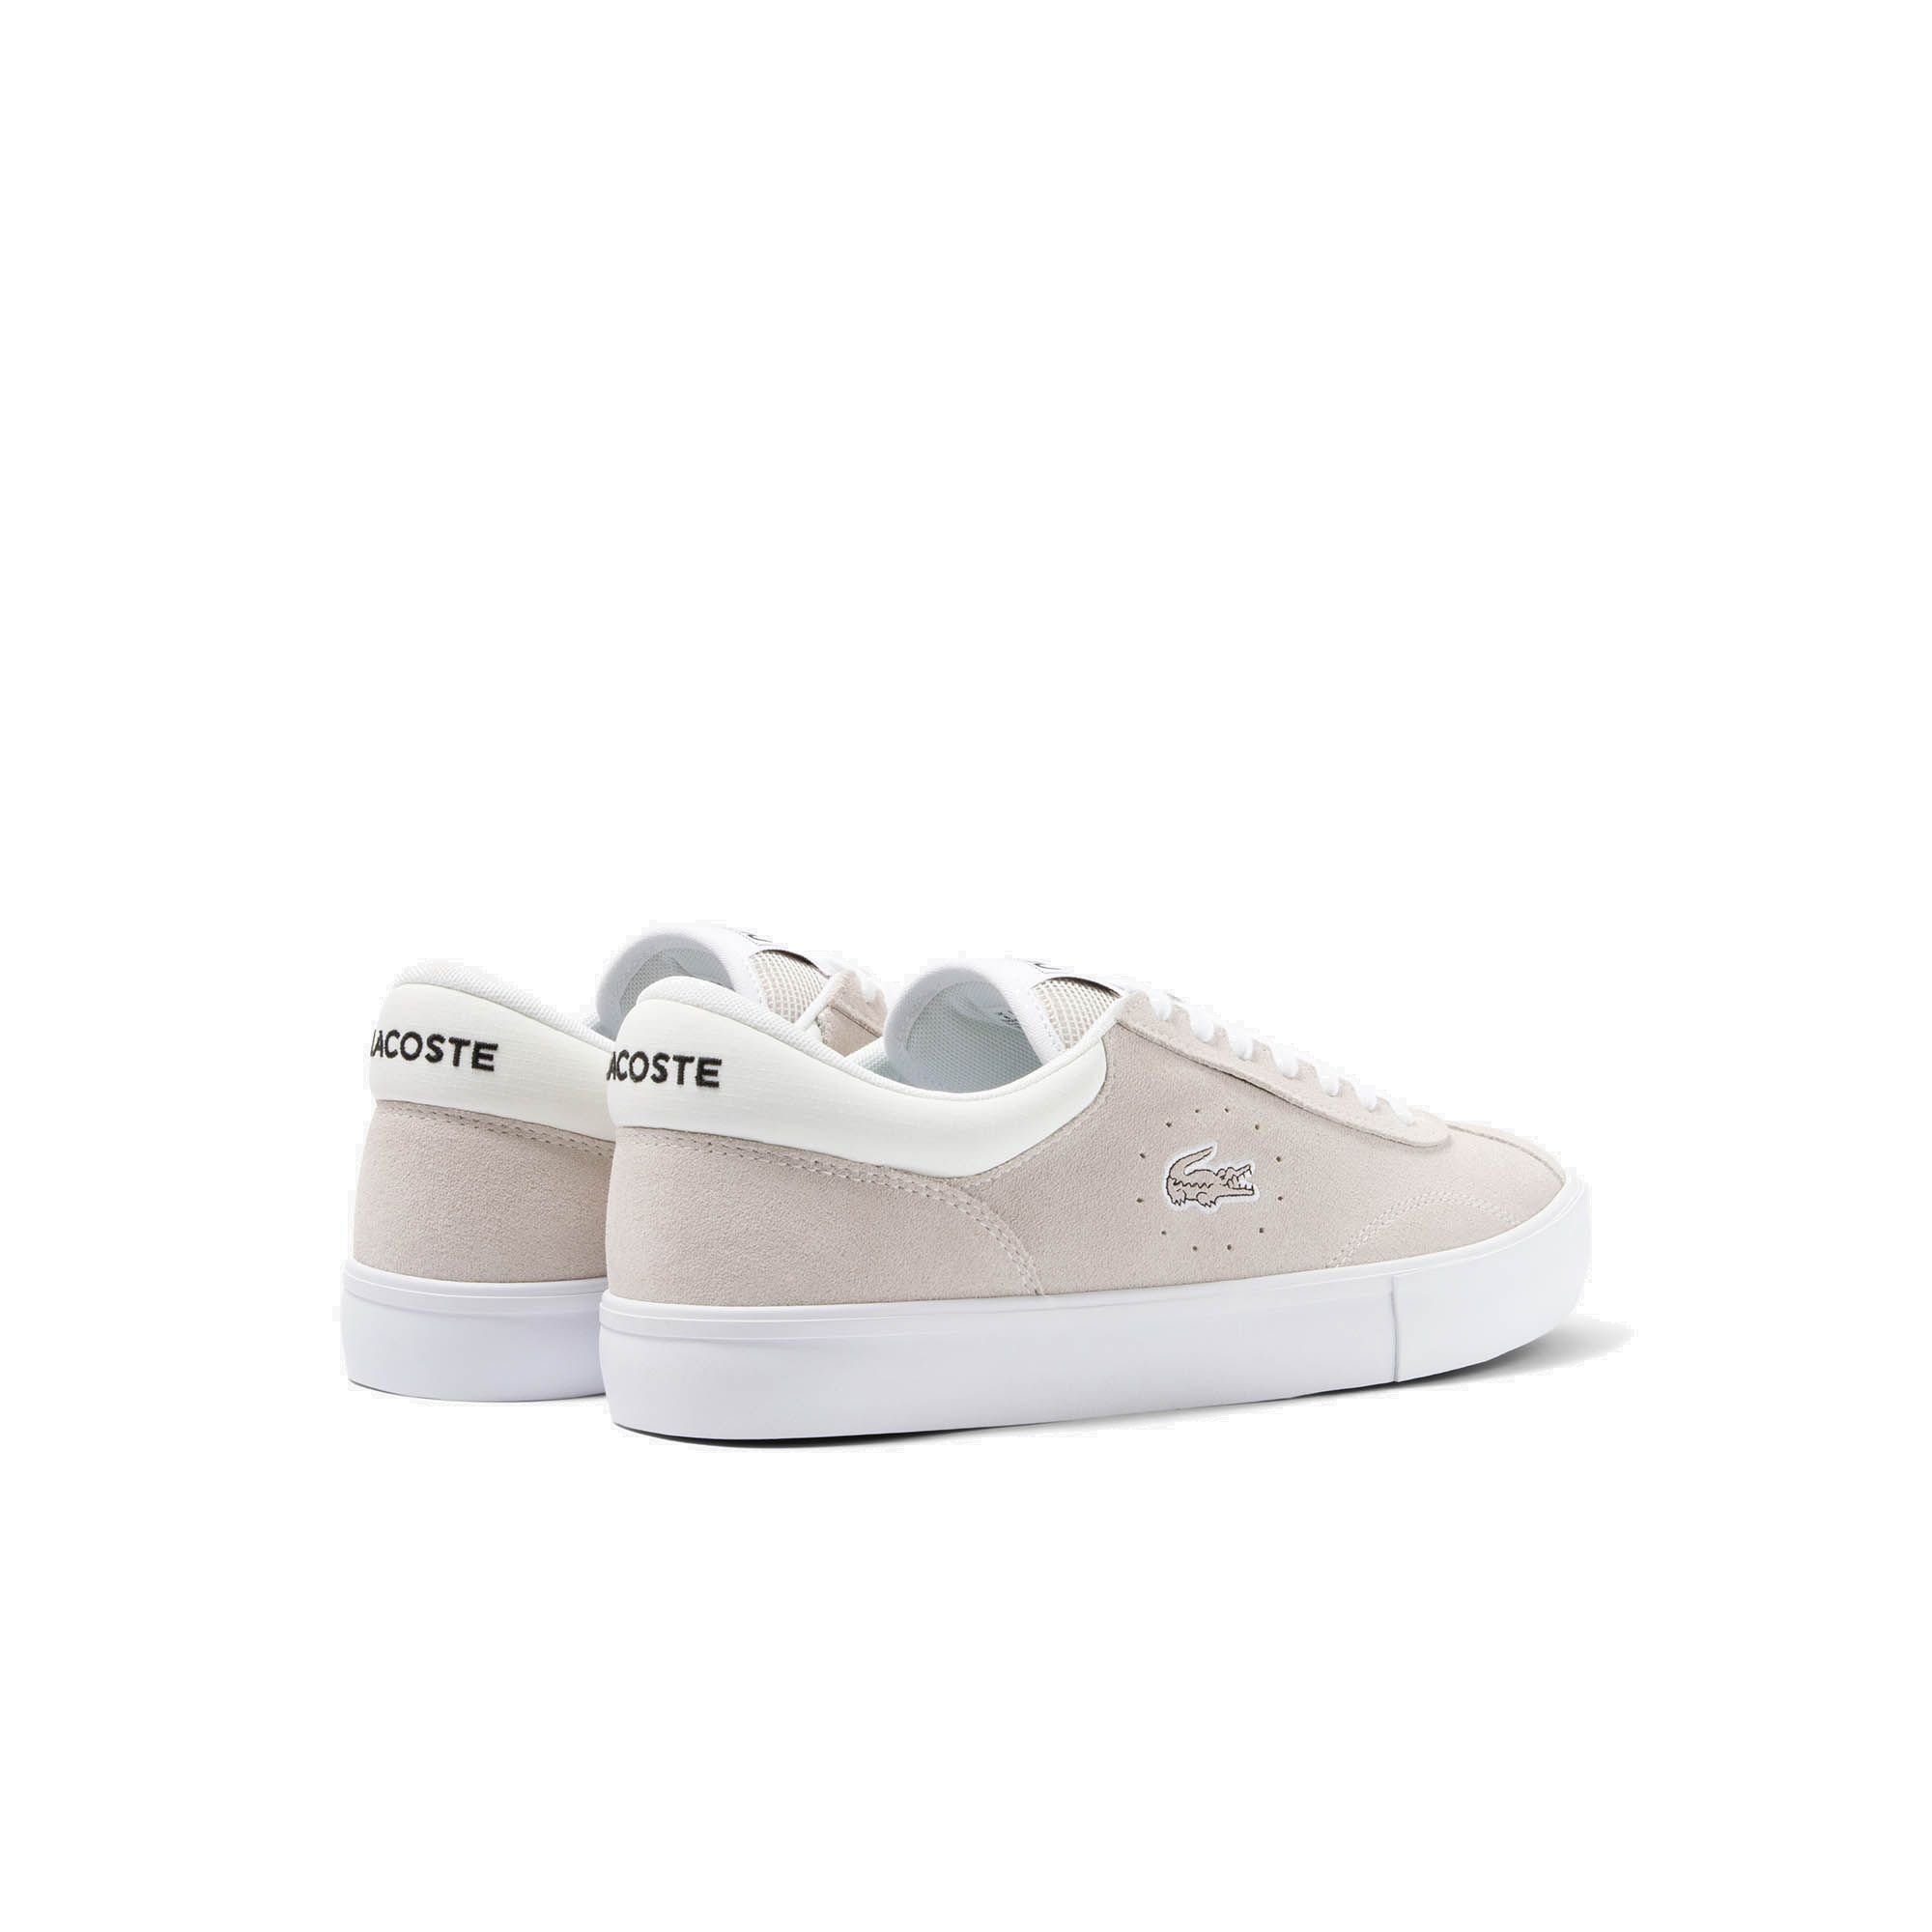 Sneaker OFFWHITE/WHITE (03A) Lacoste